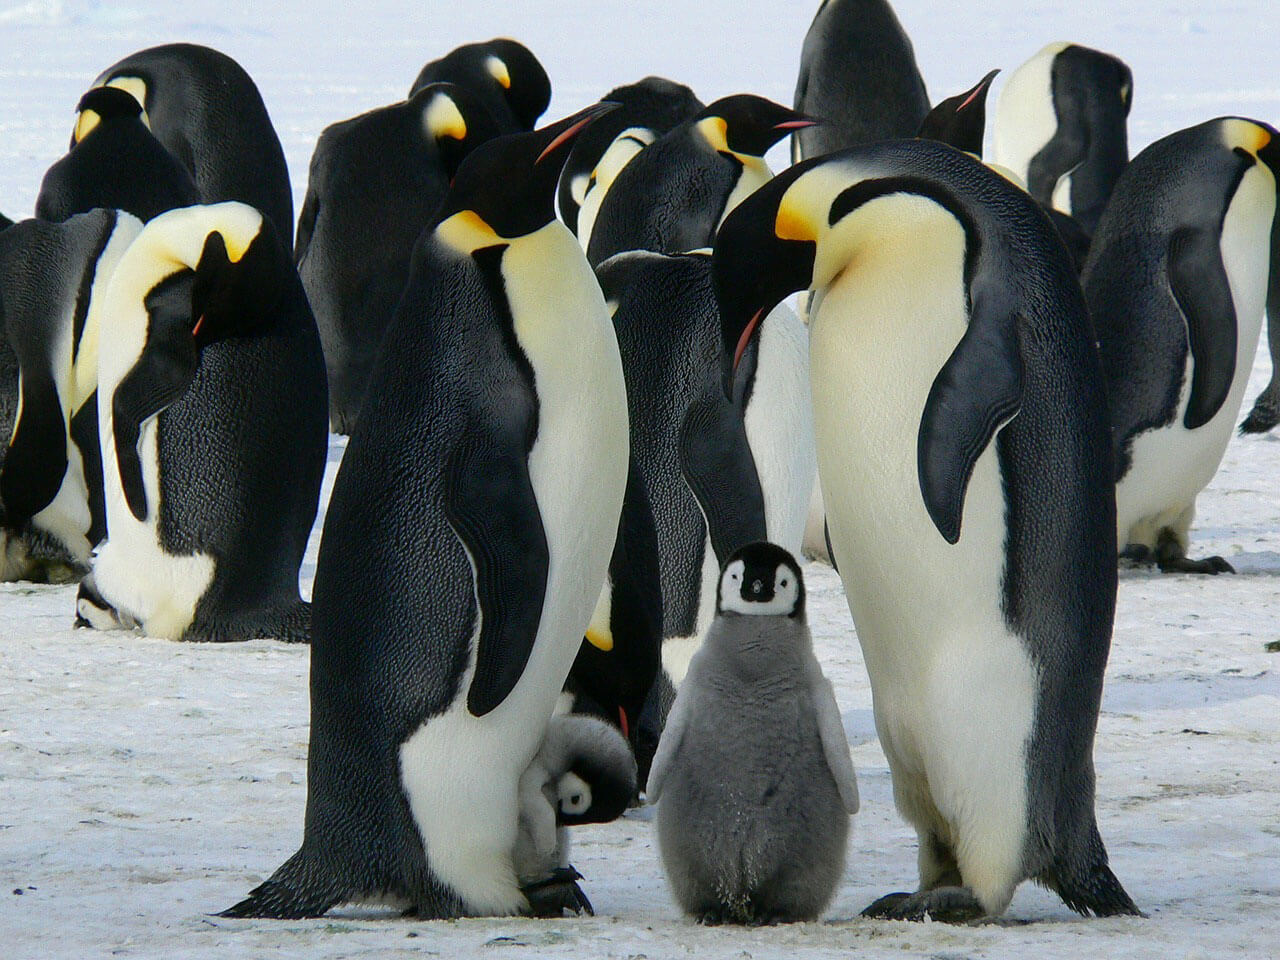 emperor-penguins